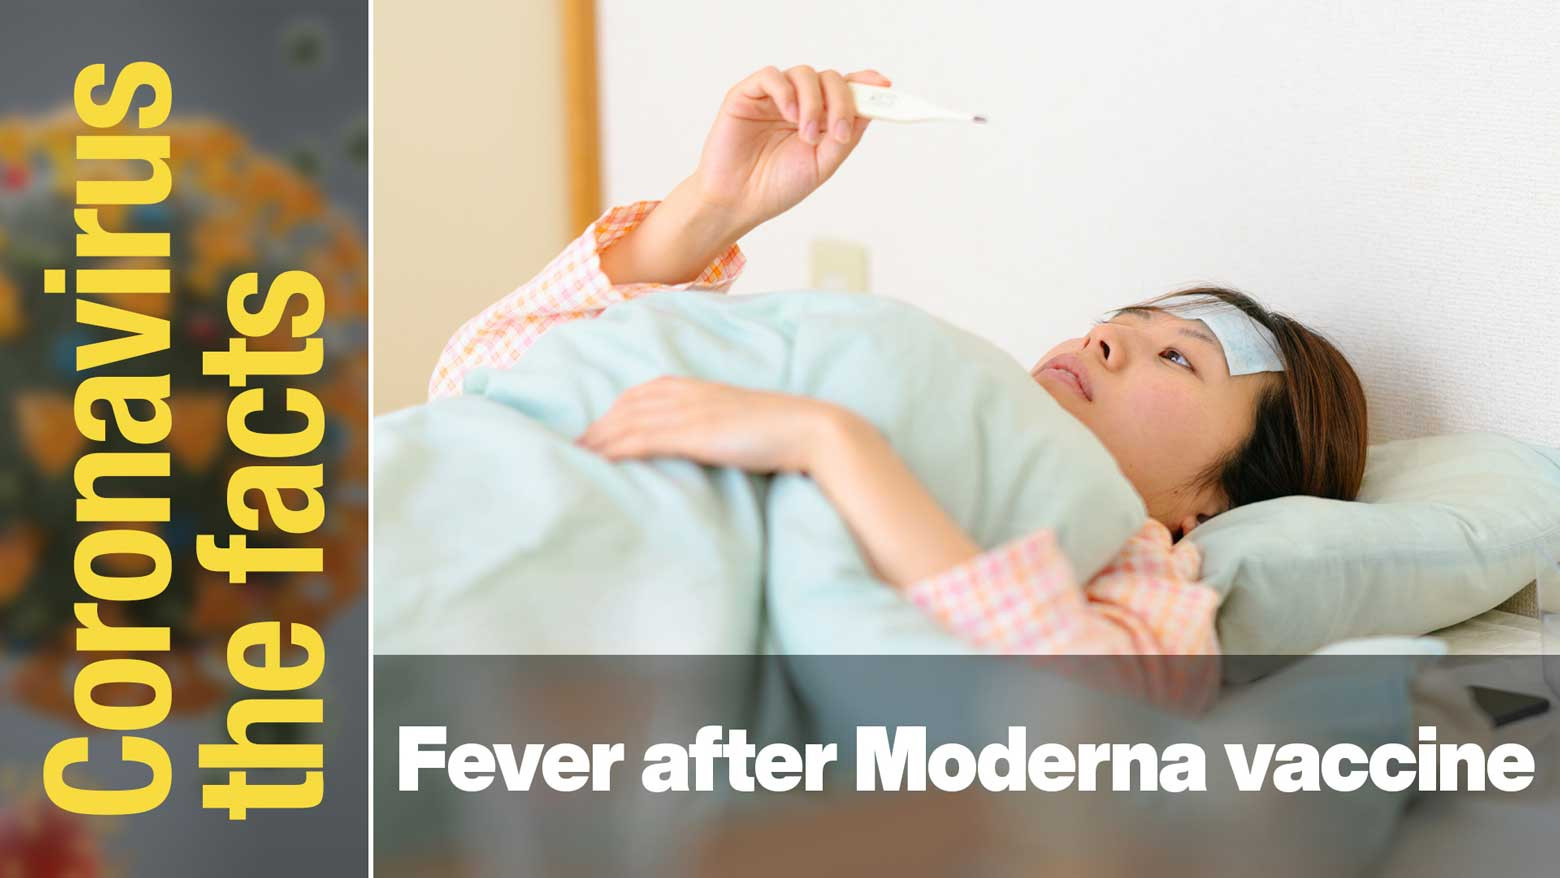 Study finds 75% of people develop fever after 2nd Moderna shot